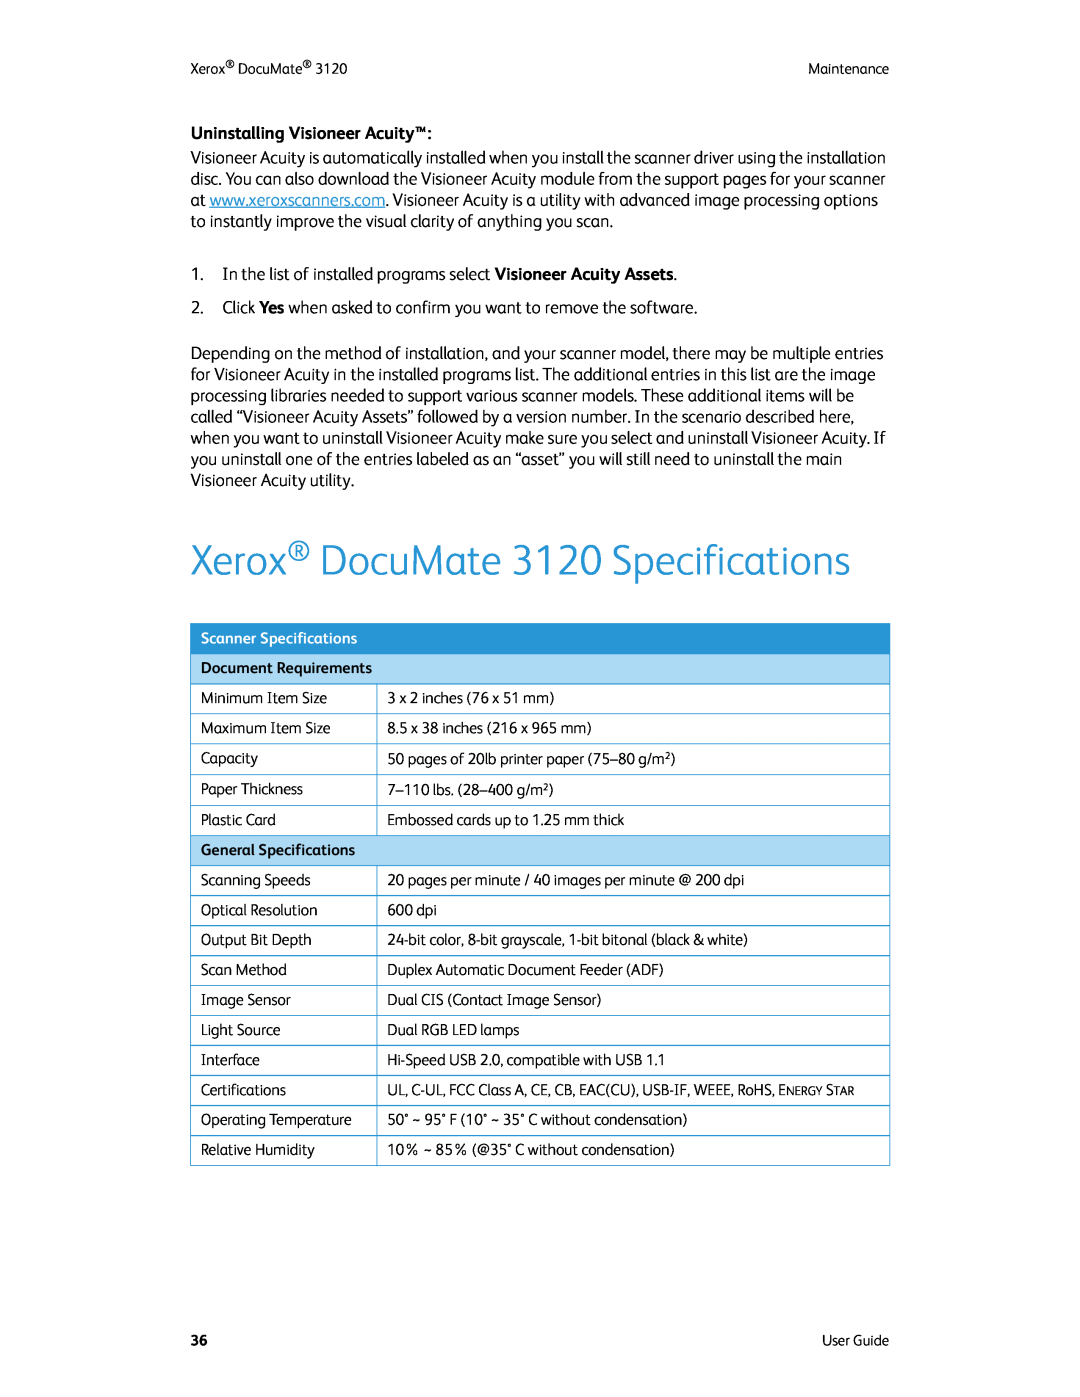 Xerox xerox manual Xerox DocuMate 3120 Specifications, Uninstalling Visioneer Acuity 